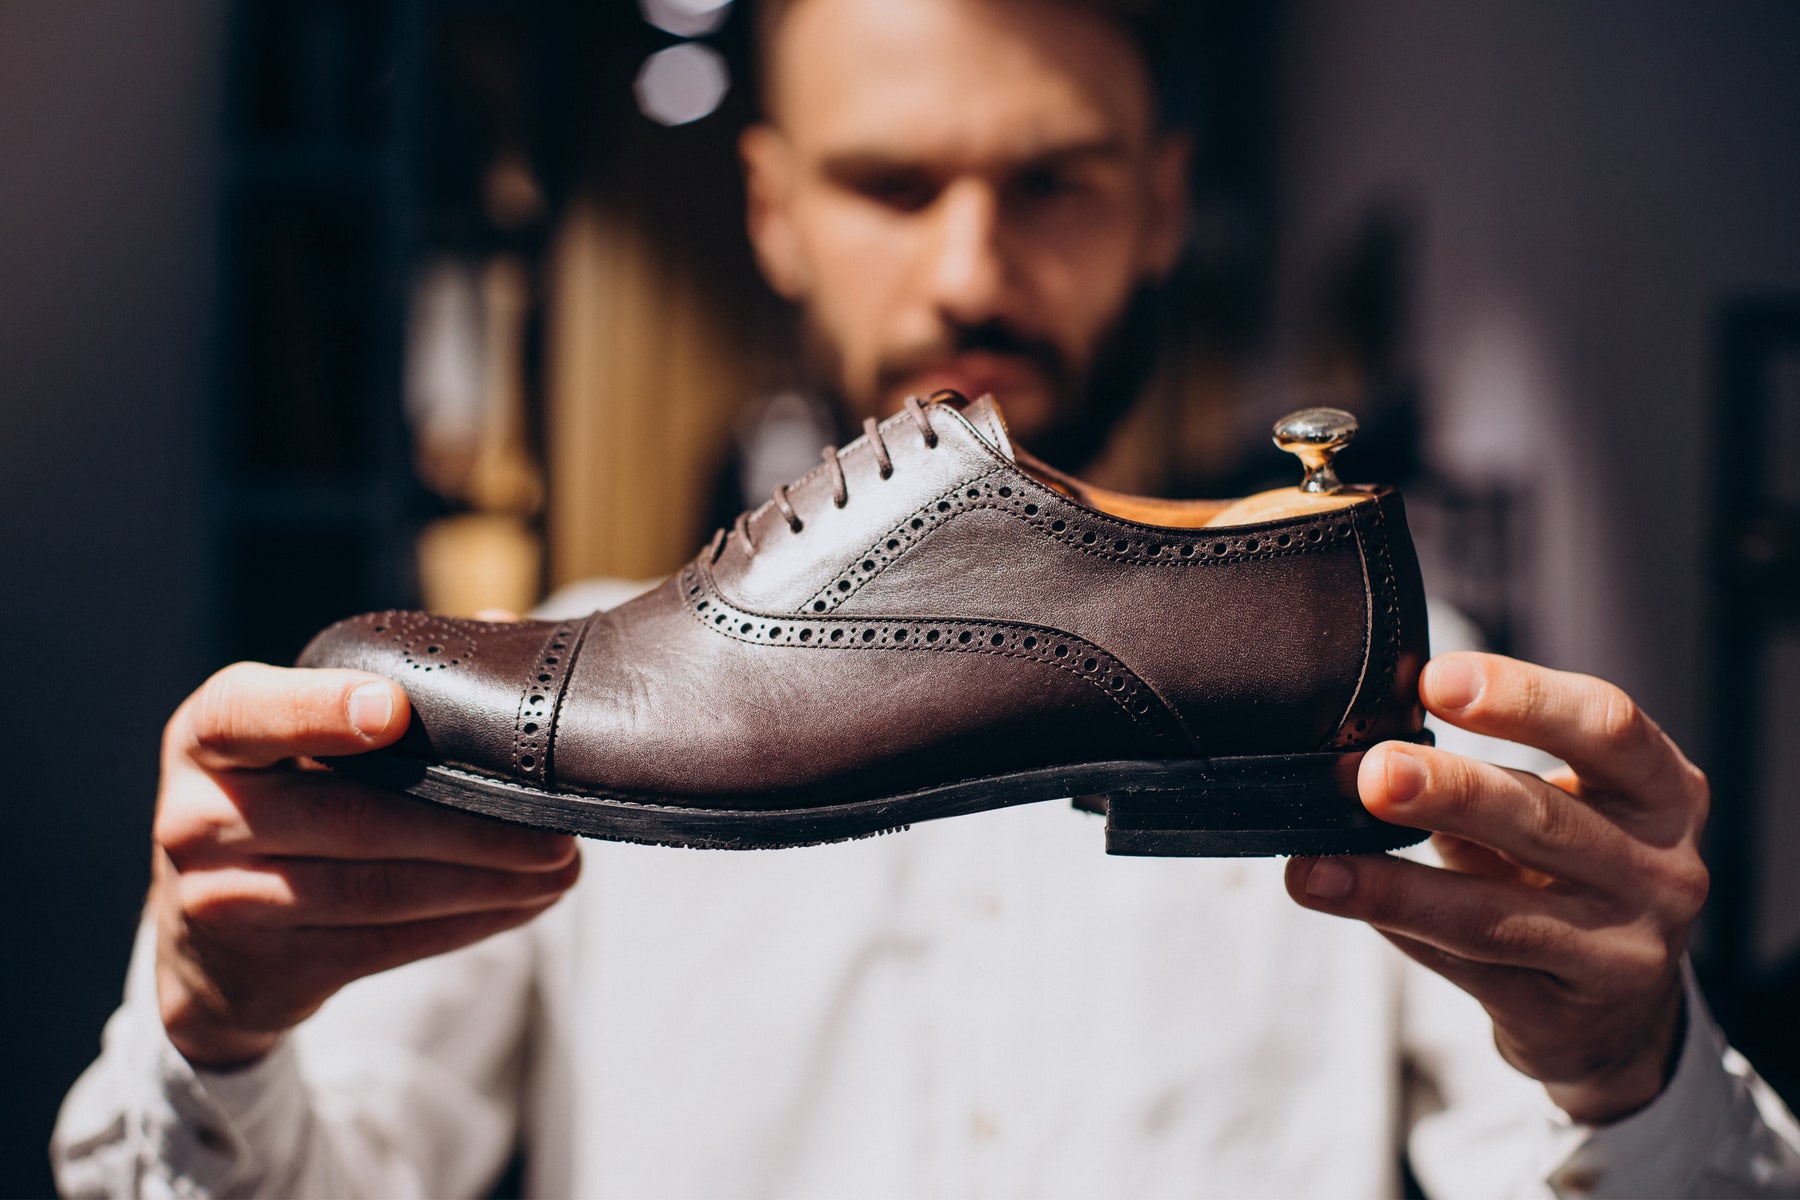 Mens Shoes, Shop Formal, Casual & Dress Shoe for Men at Barker Shoes.